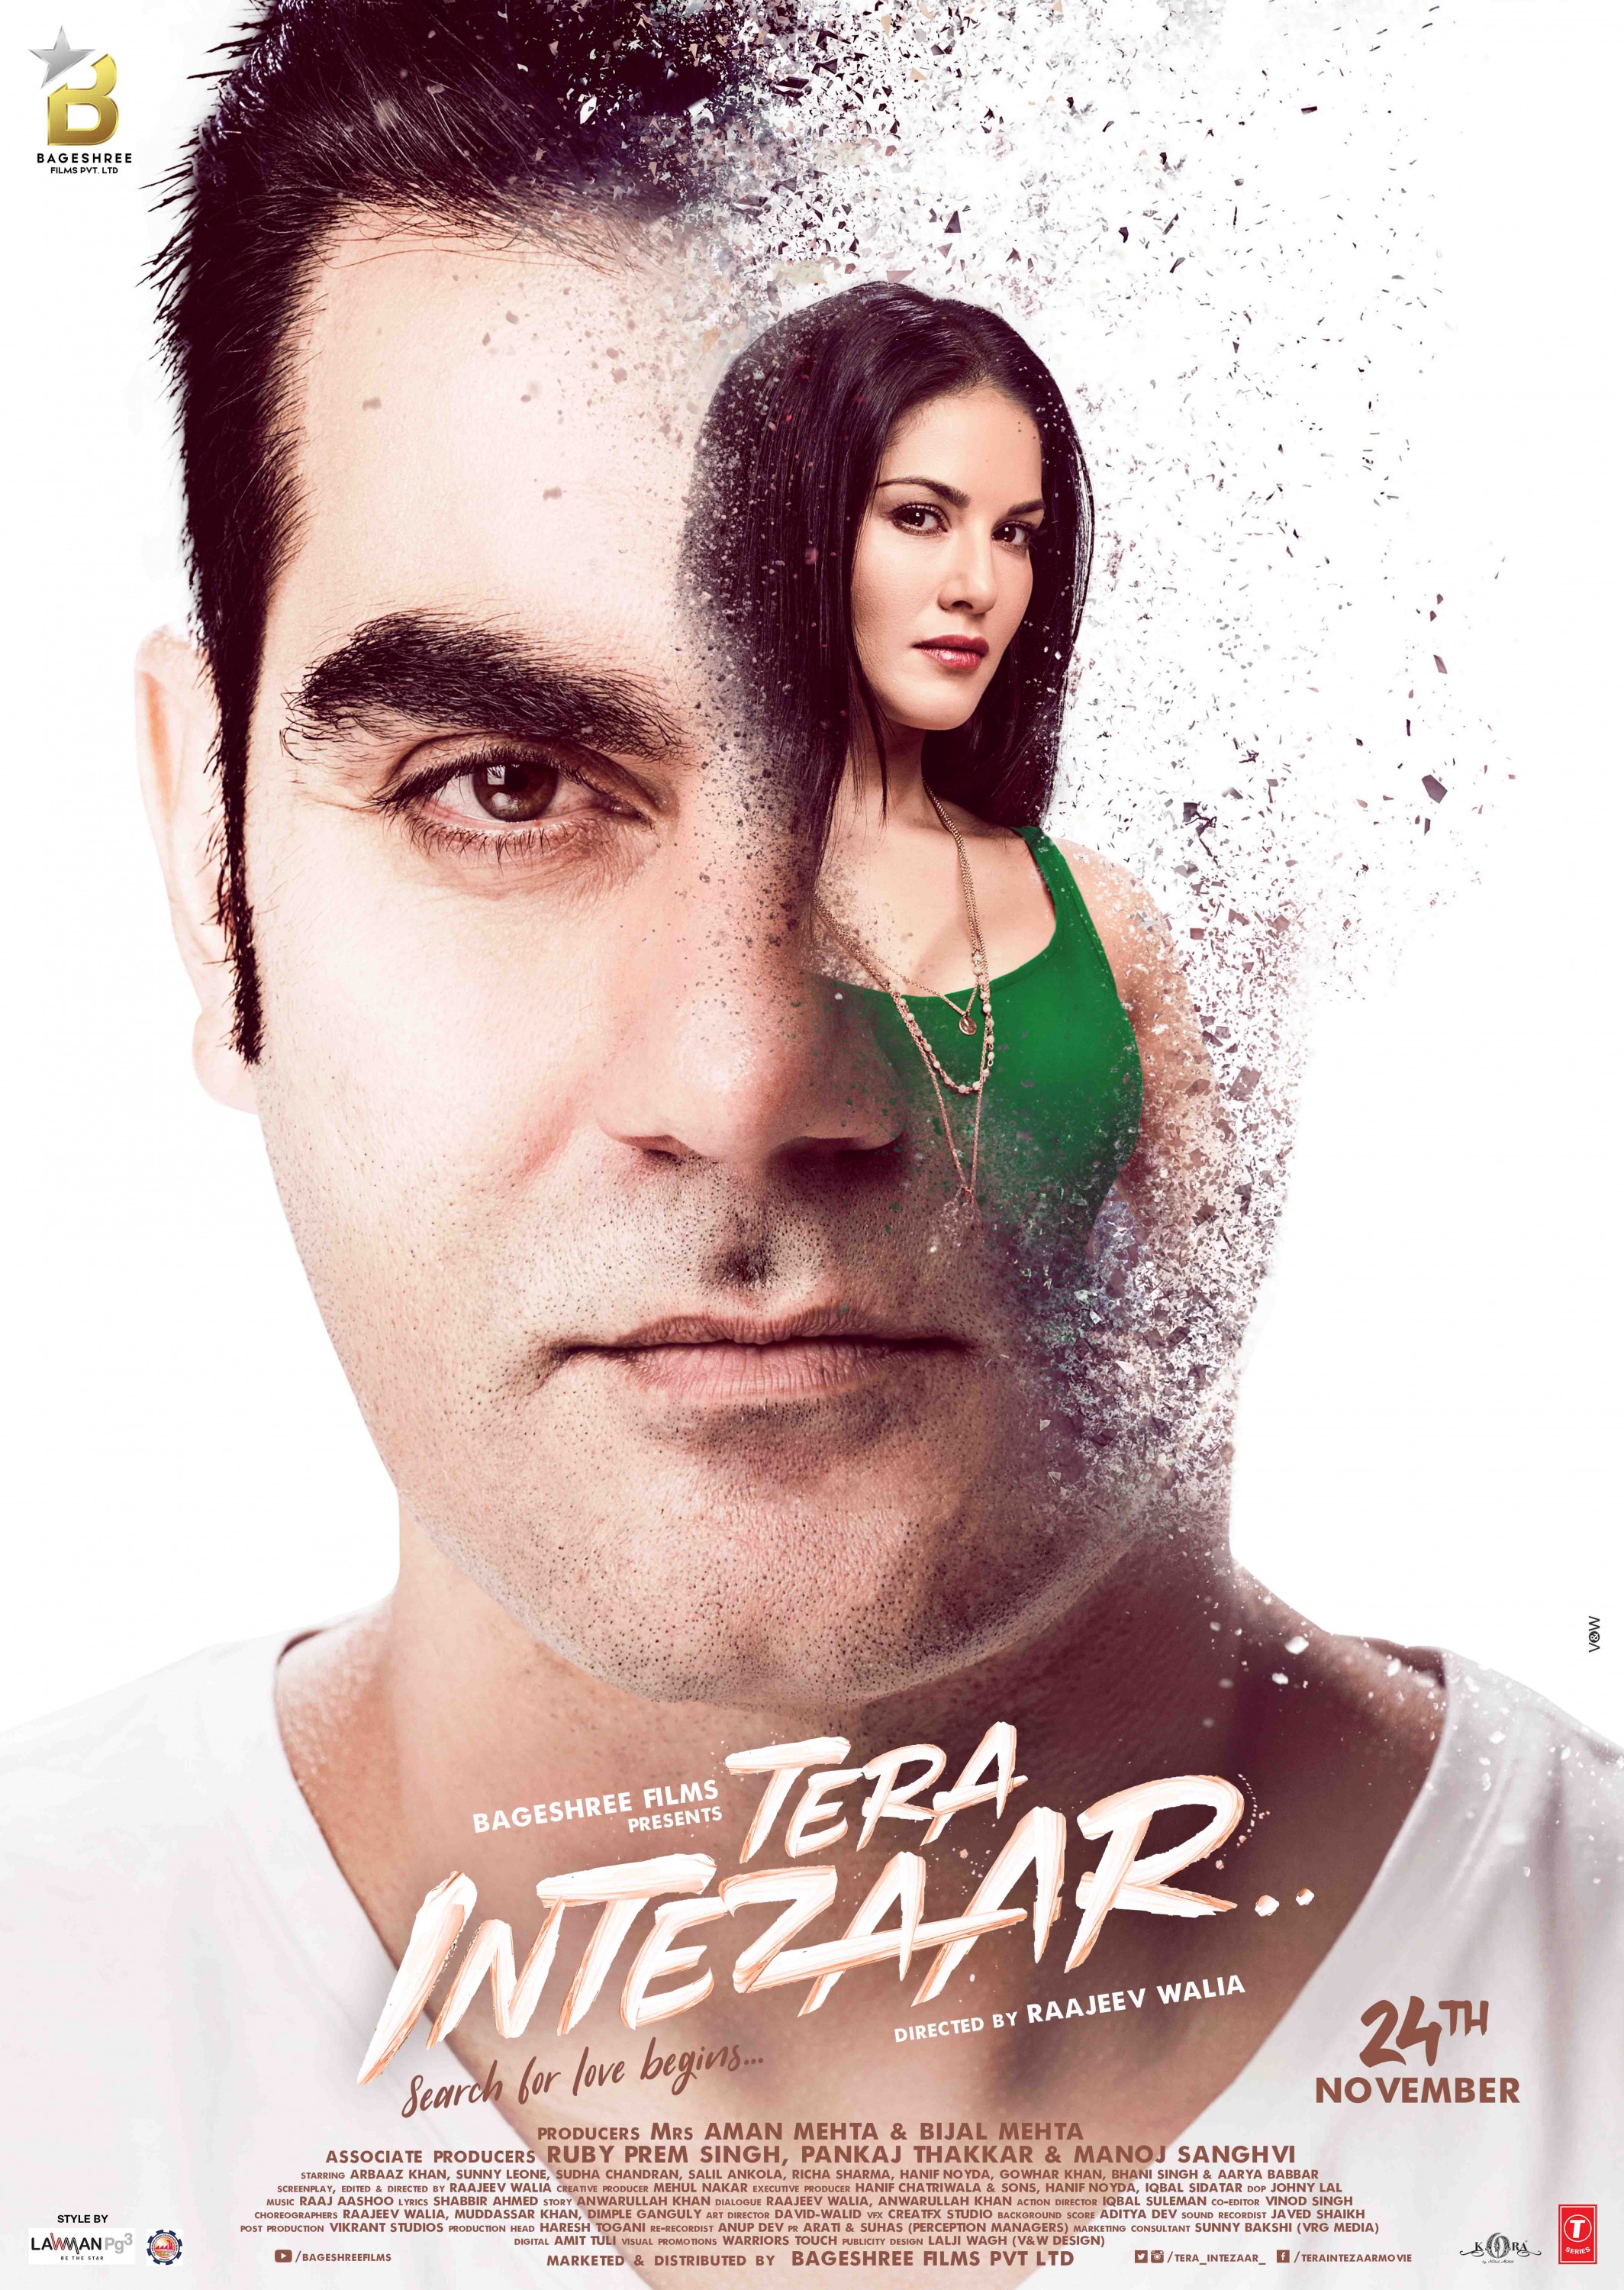 Mega Sized Movie Poster Image for Tera Intezaar (#2 of 4)